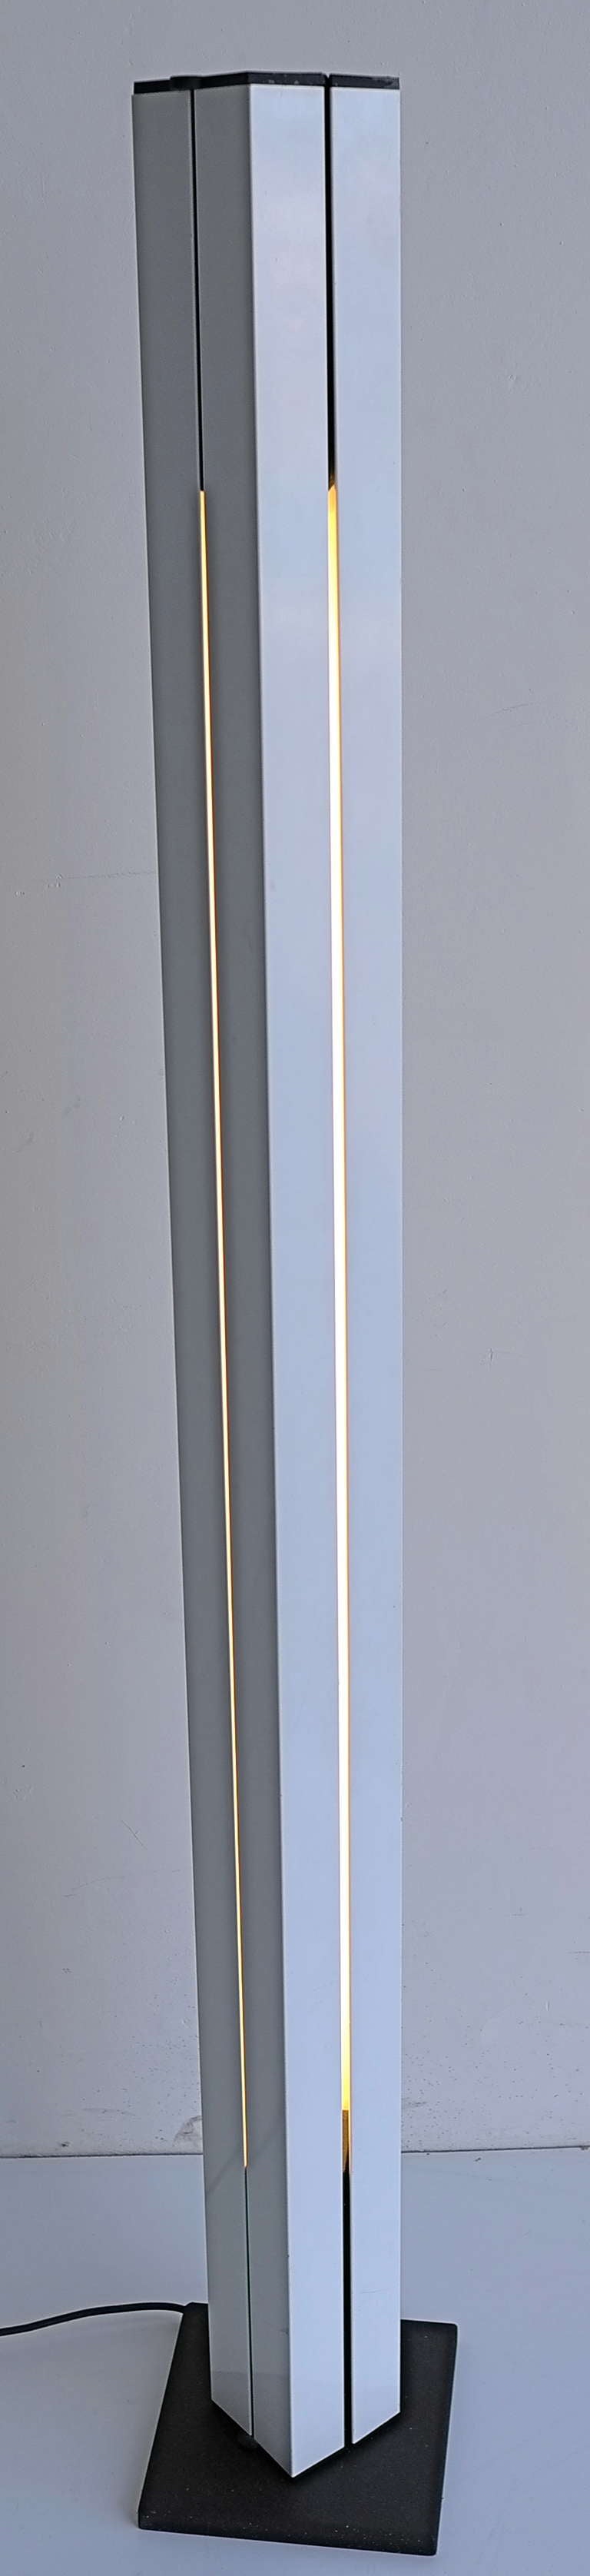 White Ettore Sottsass JR  'Moonlight' floor lamp, model no. 14104, 1970s
Originl white painted metal.
163 x 22 x 22 cm
Manufactured by Arredoluce, Monza, Italy.
Footnotes
Literature

Fulvio Ferrari and Napoleone Ferrari, Light: Lamps 1968-1973: new